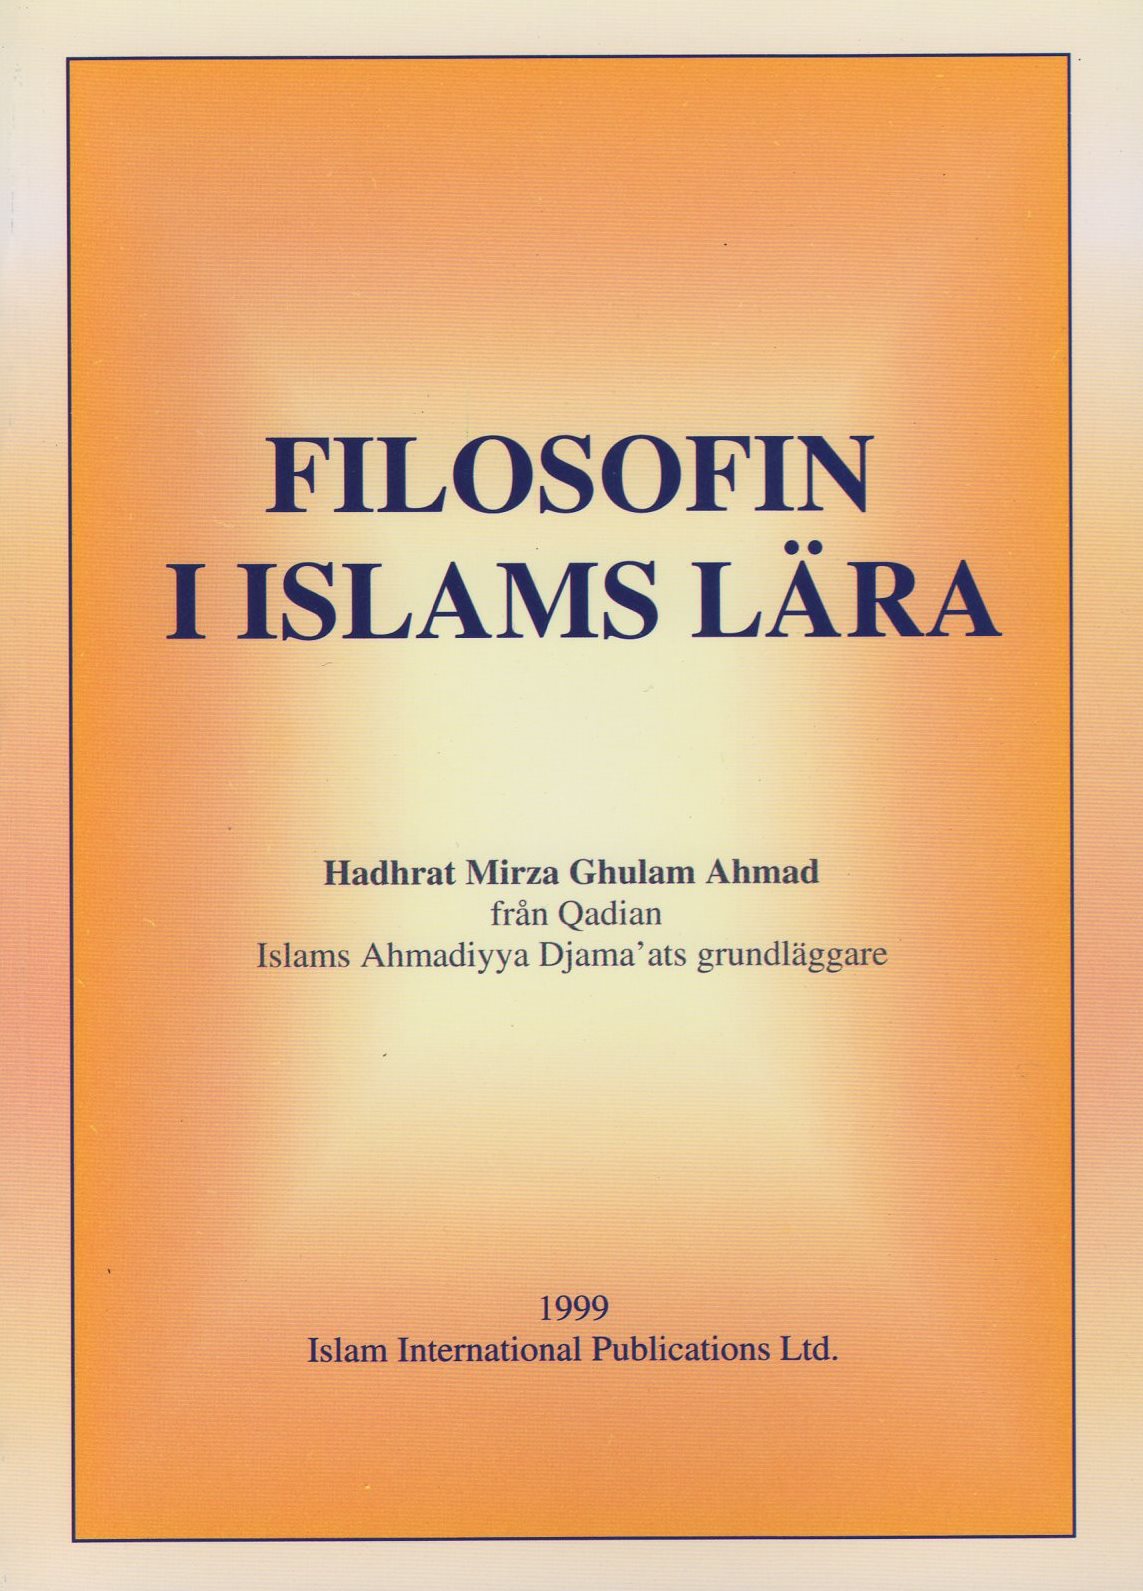 The Philosophy of The Teaching of Islam (Swedish Language)